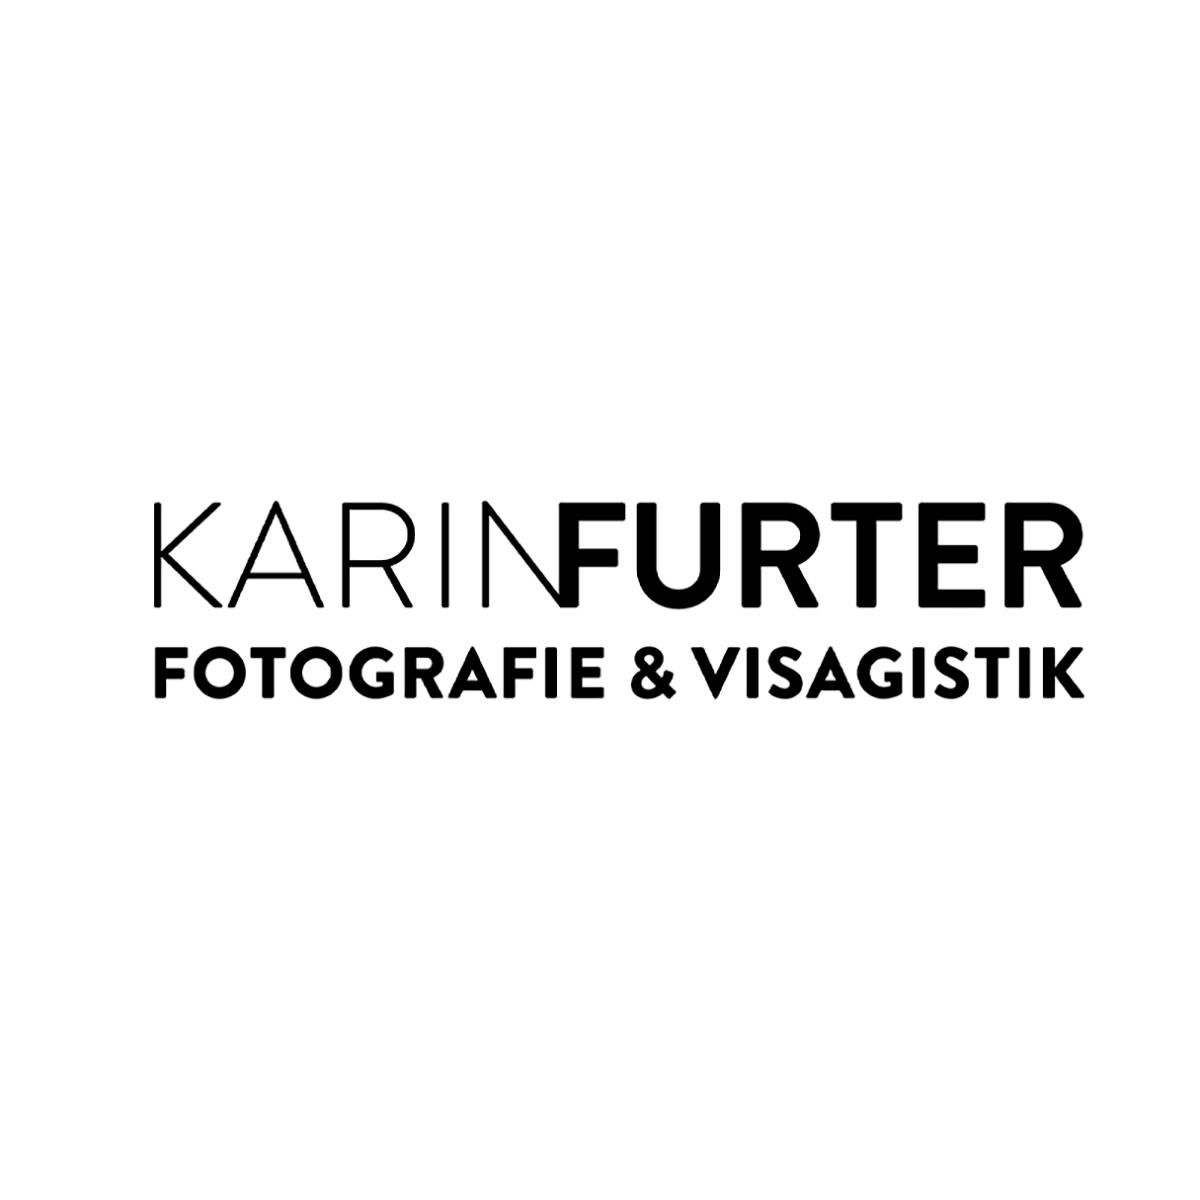 Karin Furter